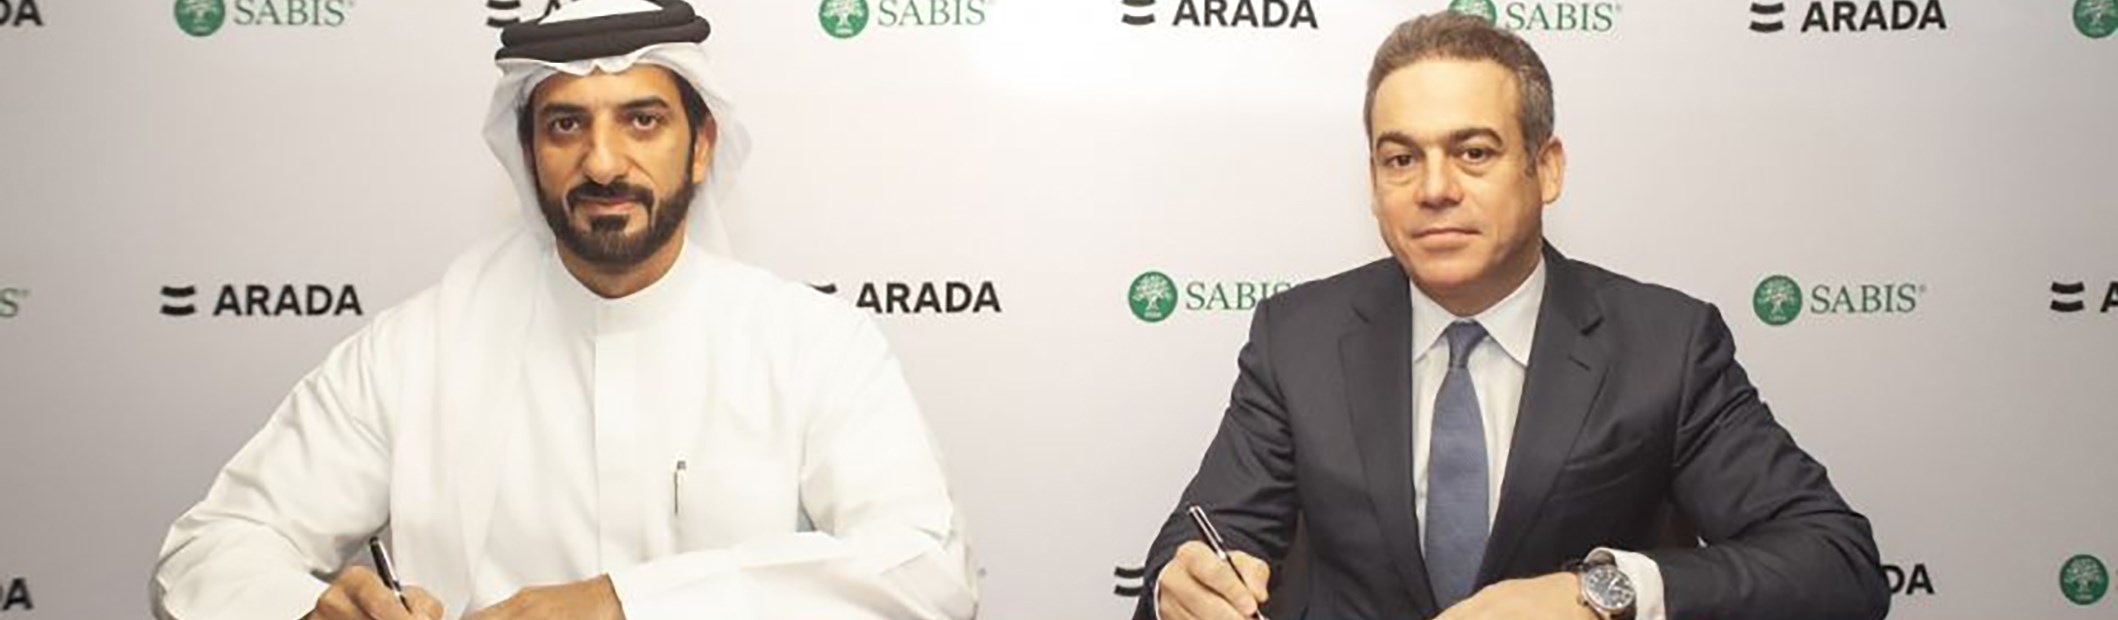 Arabian Business: Developer Arada inks deal for school at Sharjah megaproject